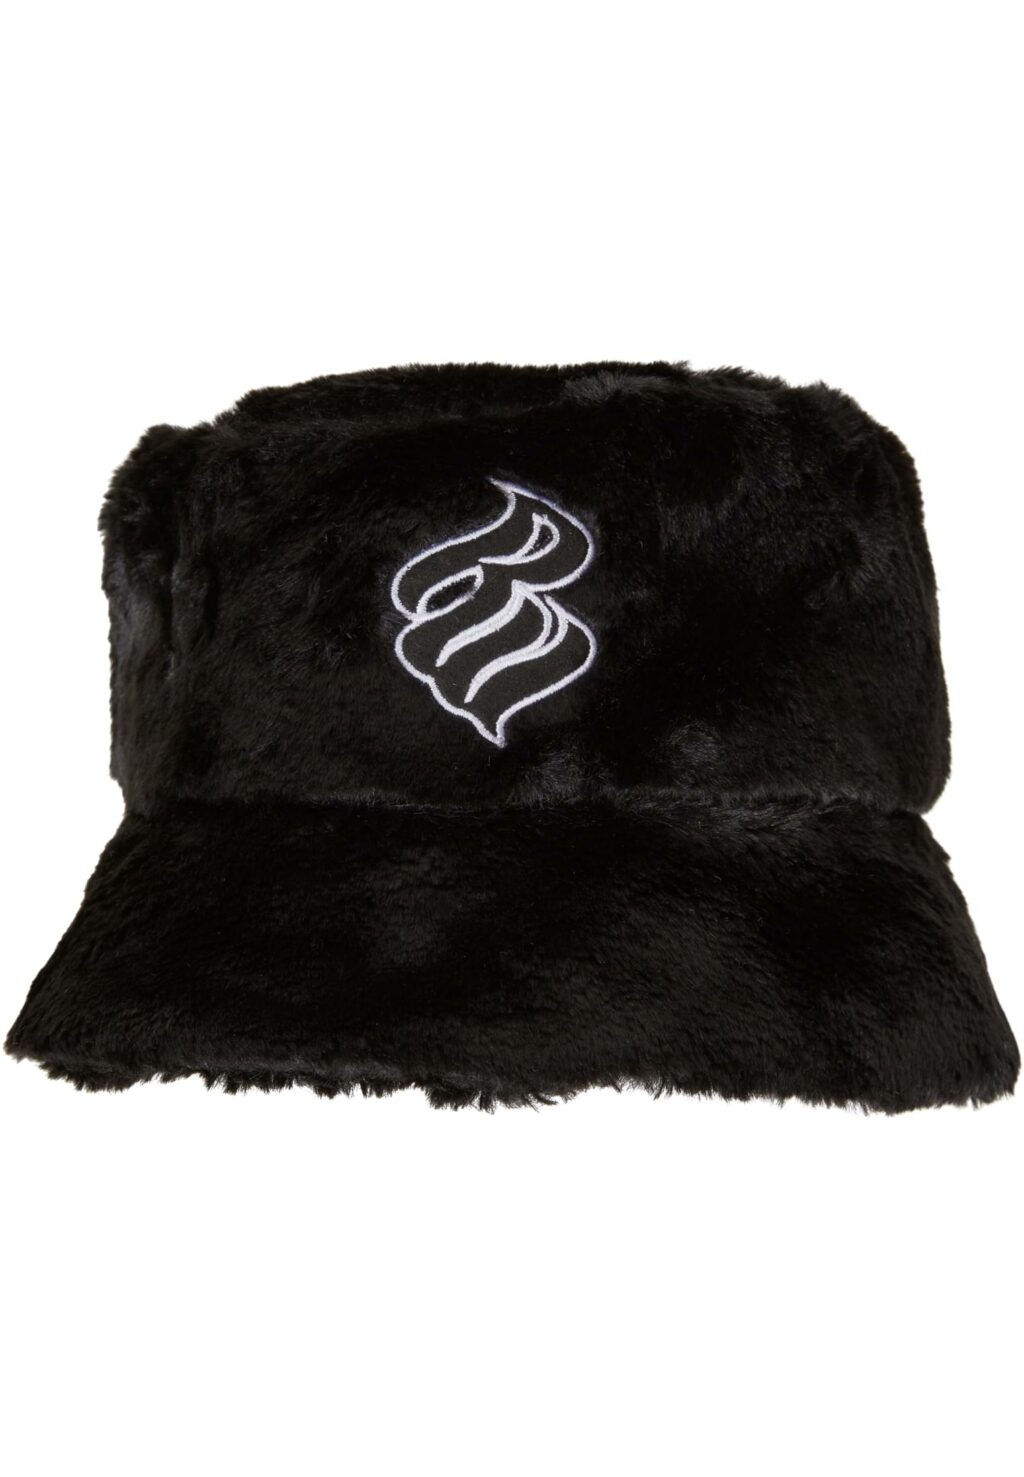 Rocawear Carino Fur Bucket Hat black one RWLCA002